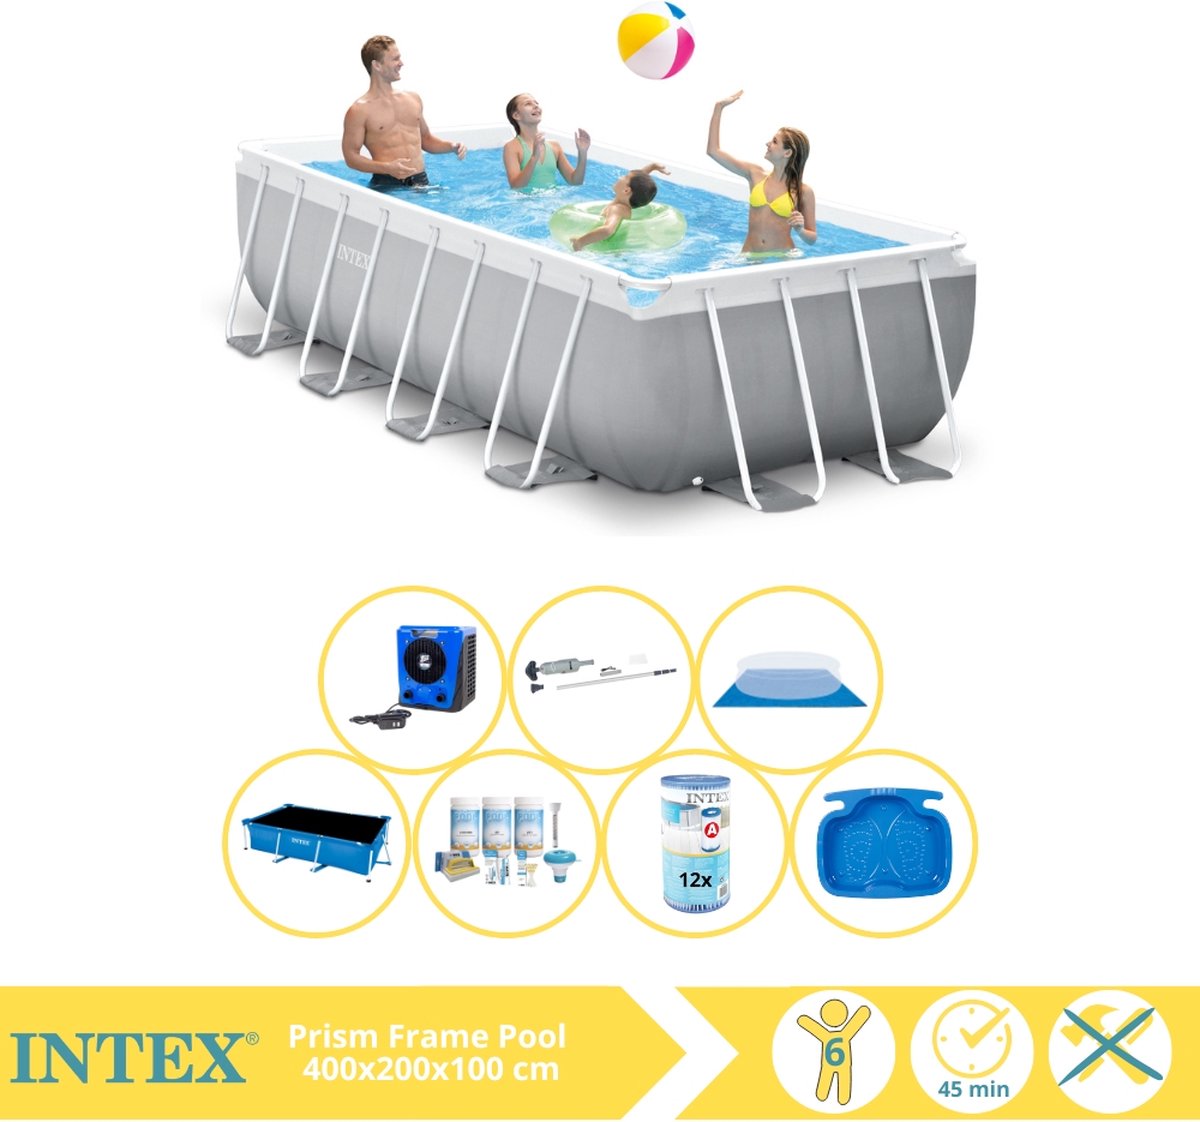 Intex Prism Frame Zwembad - Opzetzwembad - 400x200x100 cm - Inclusief Solarzeil, Onderhoudspakket, Filter, Grondzeil, Stofzuiger, Voetenbad en Warmtepomp HS